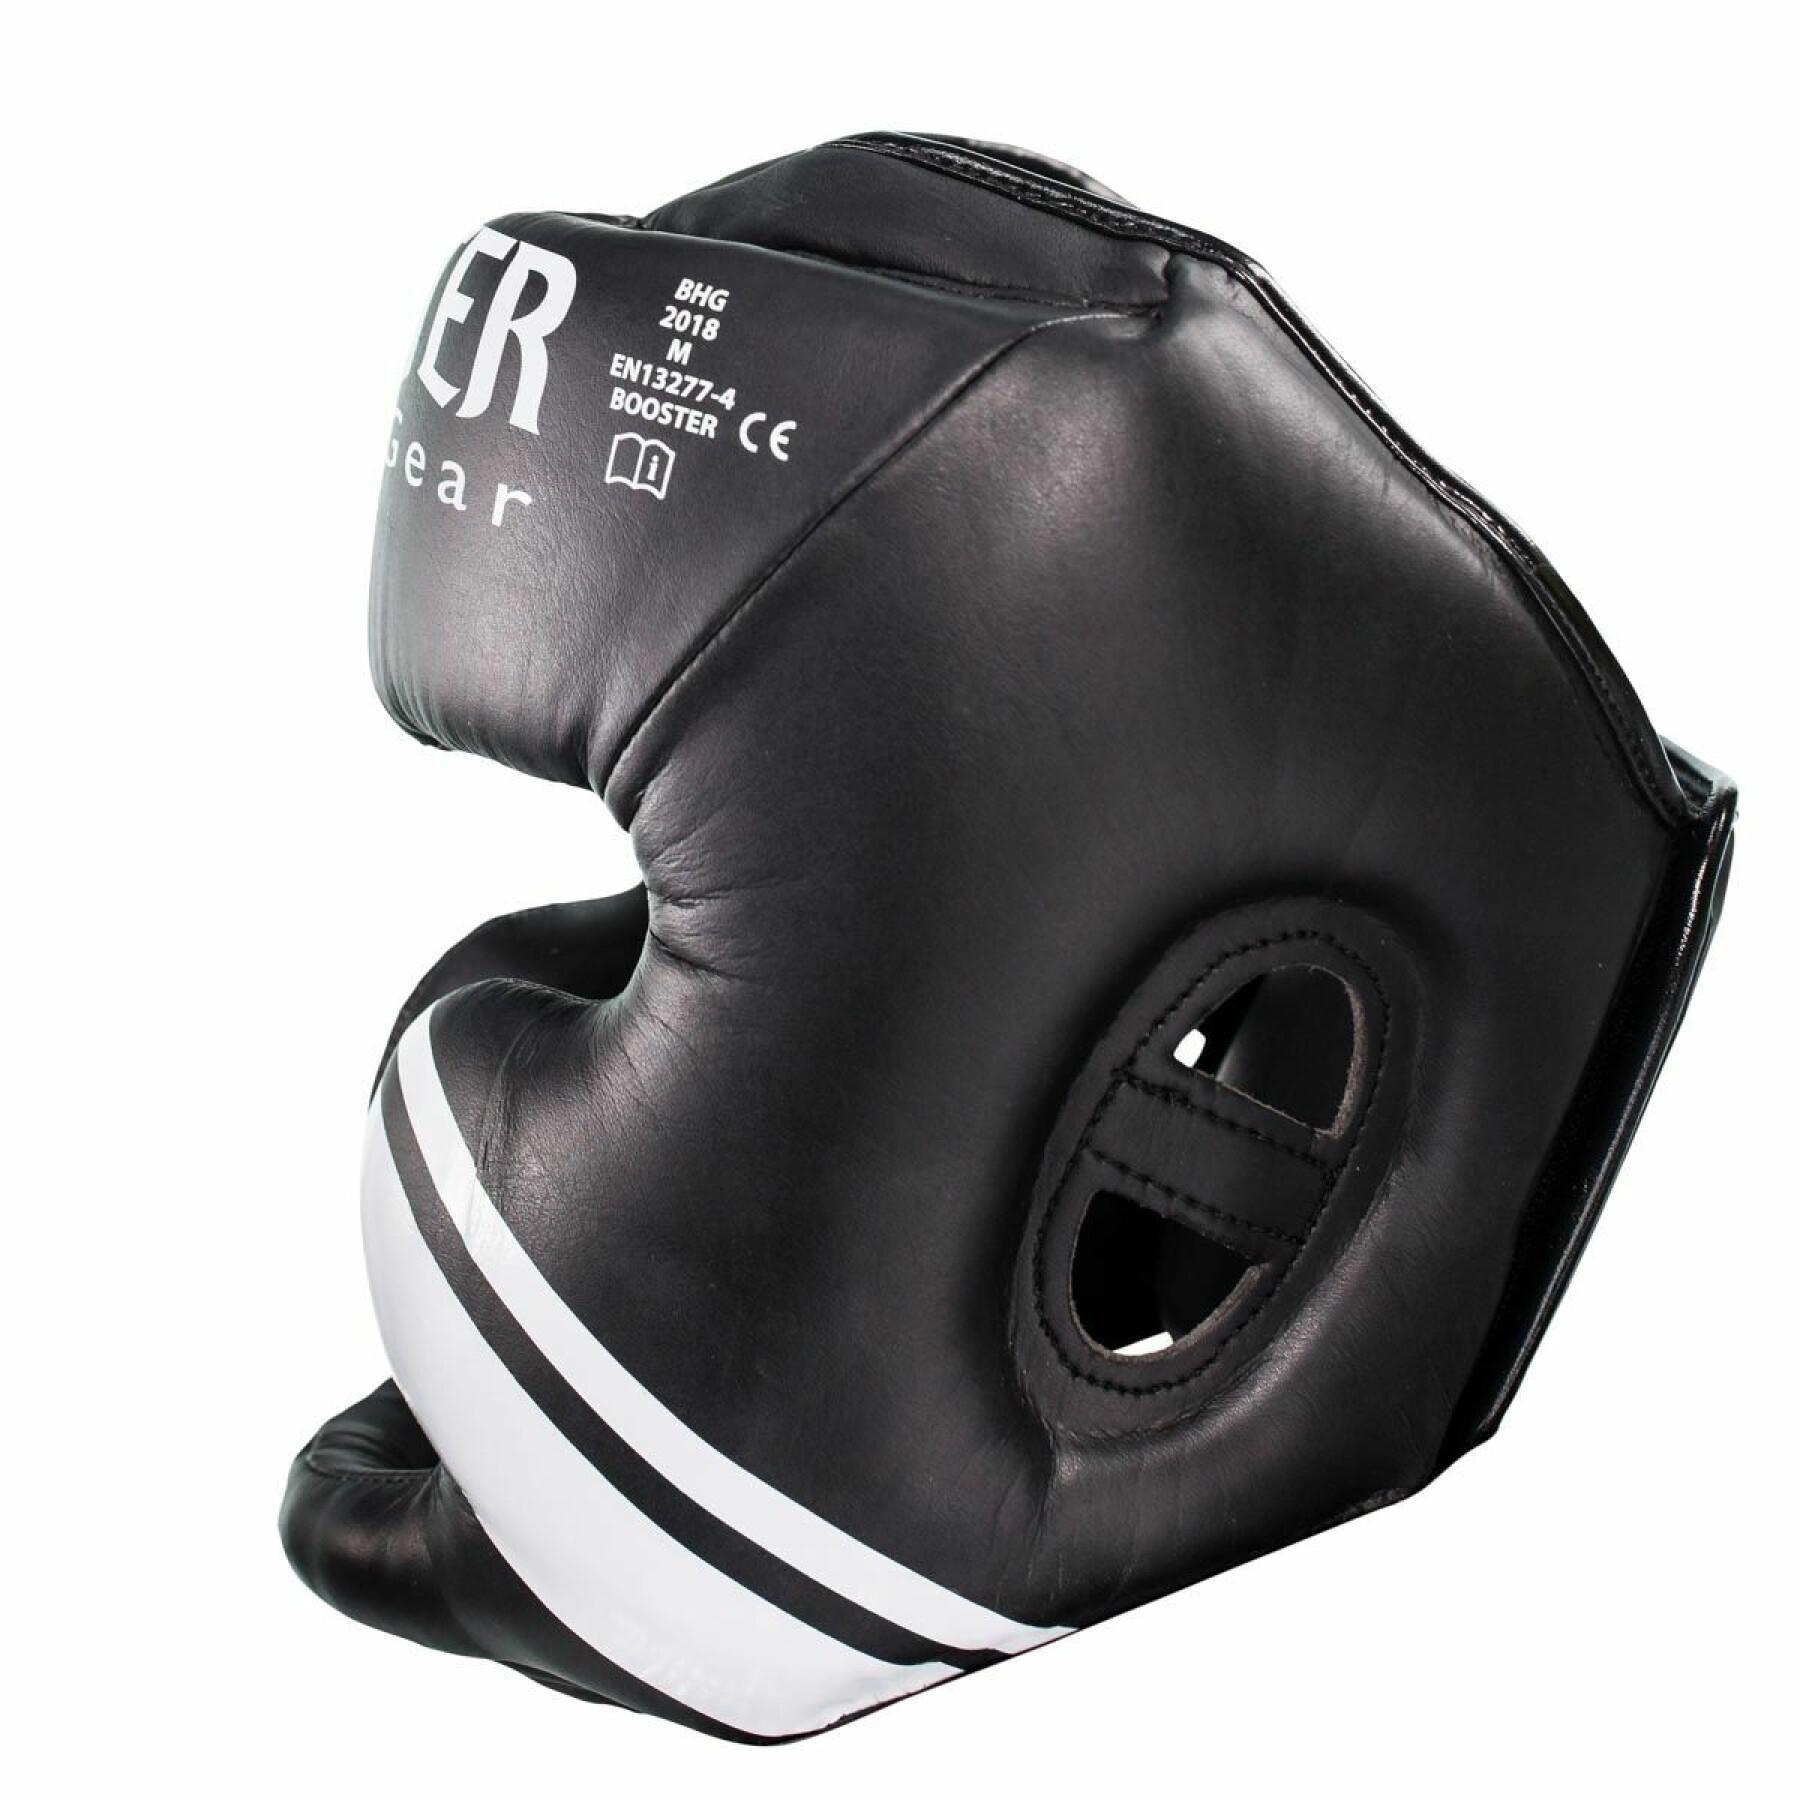 Boxing helmet Booster Fight Gear Bhg 2